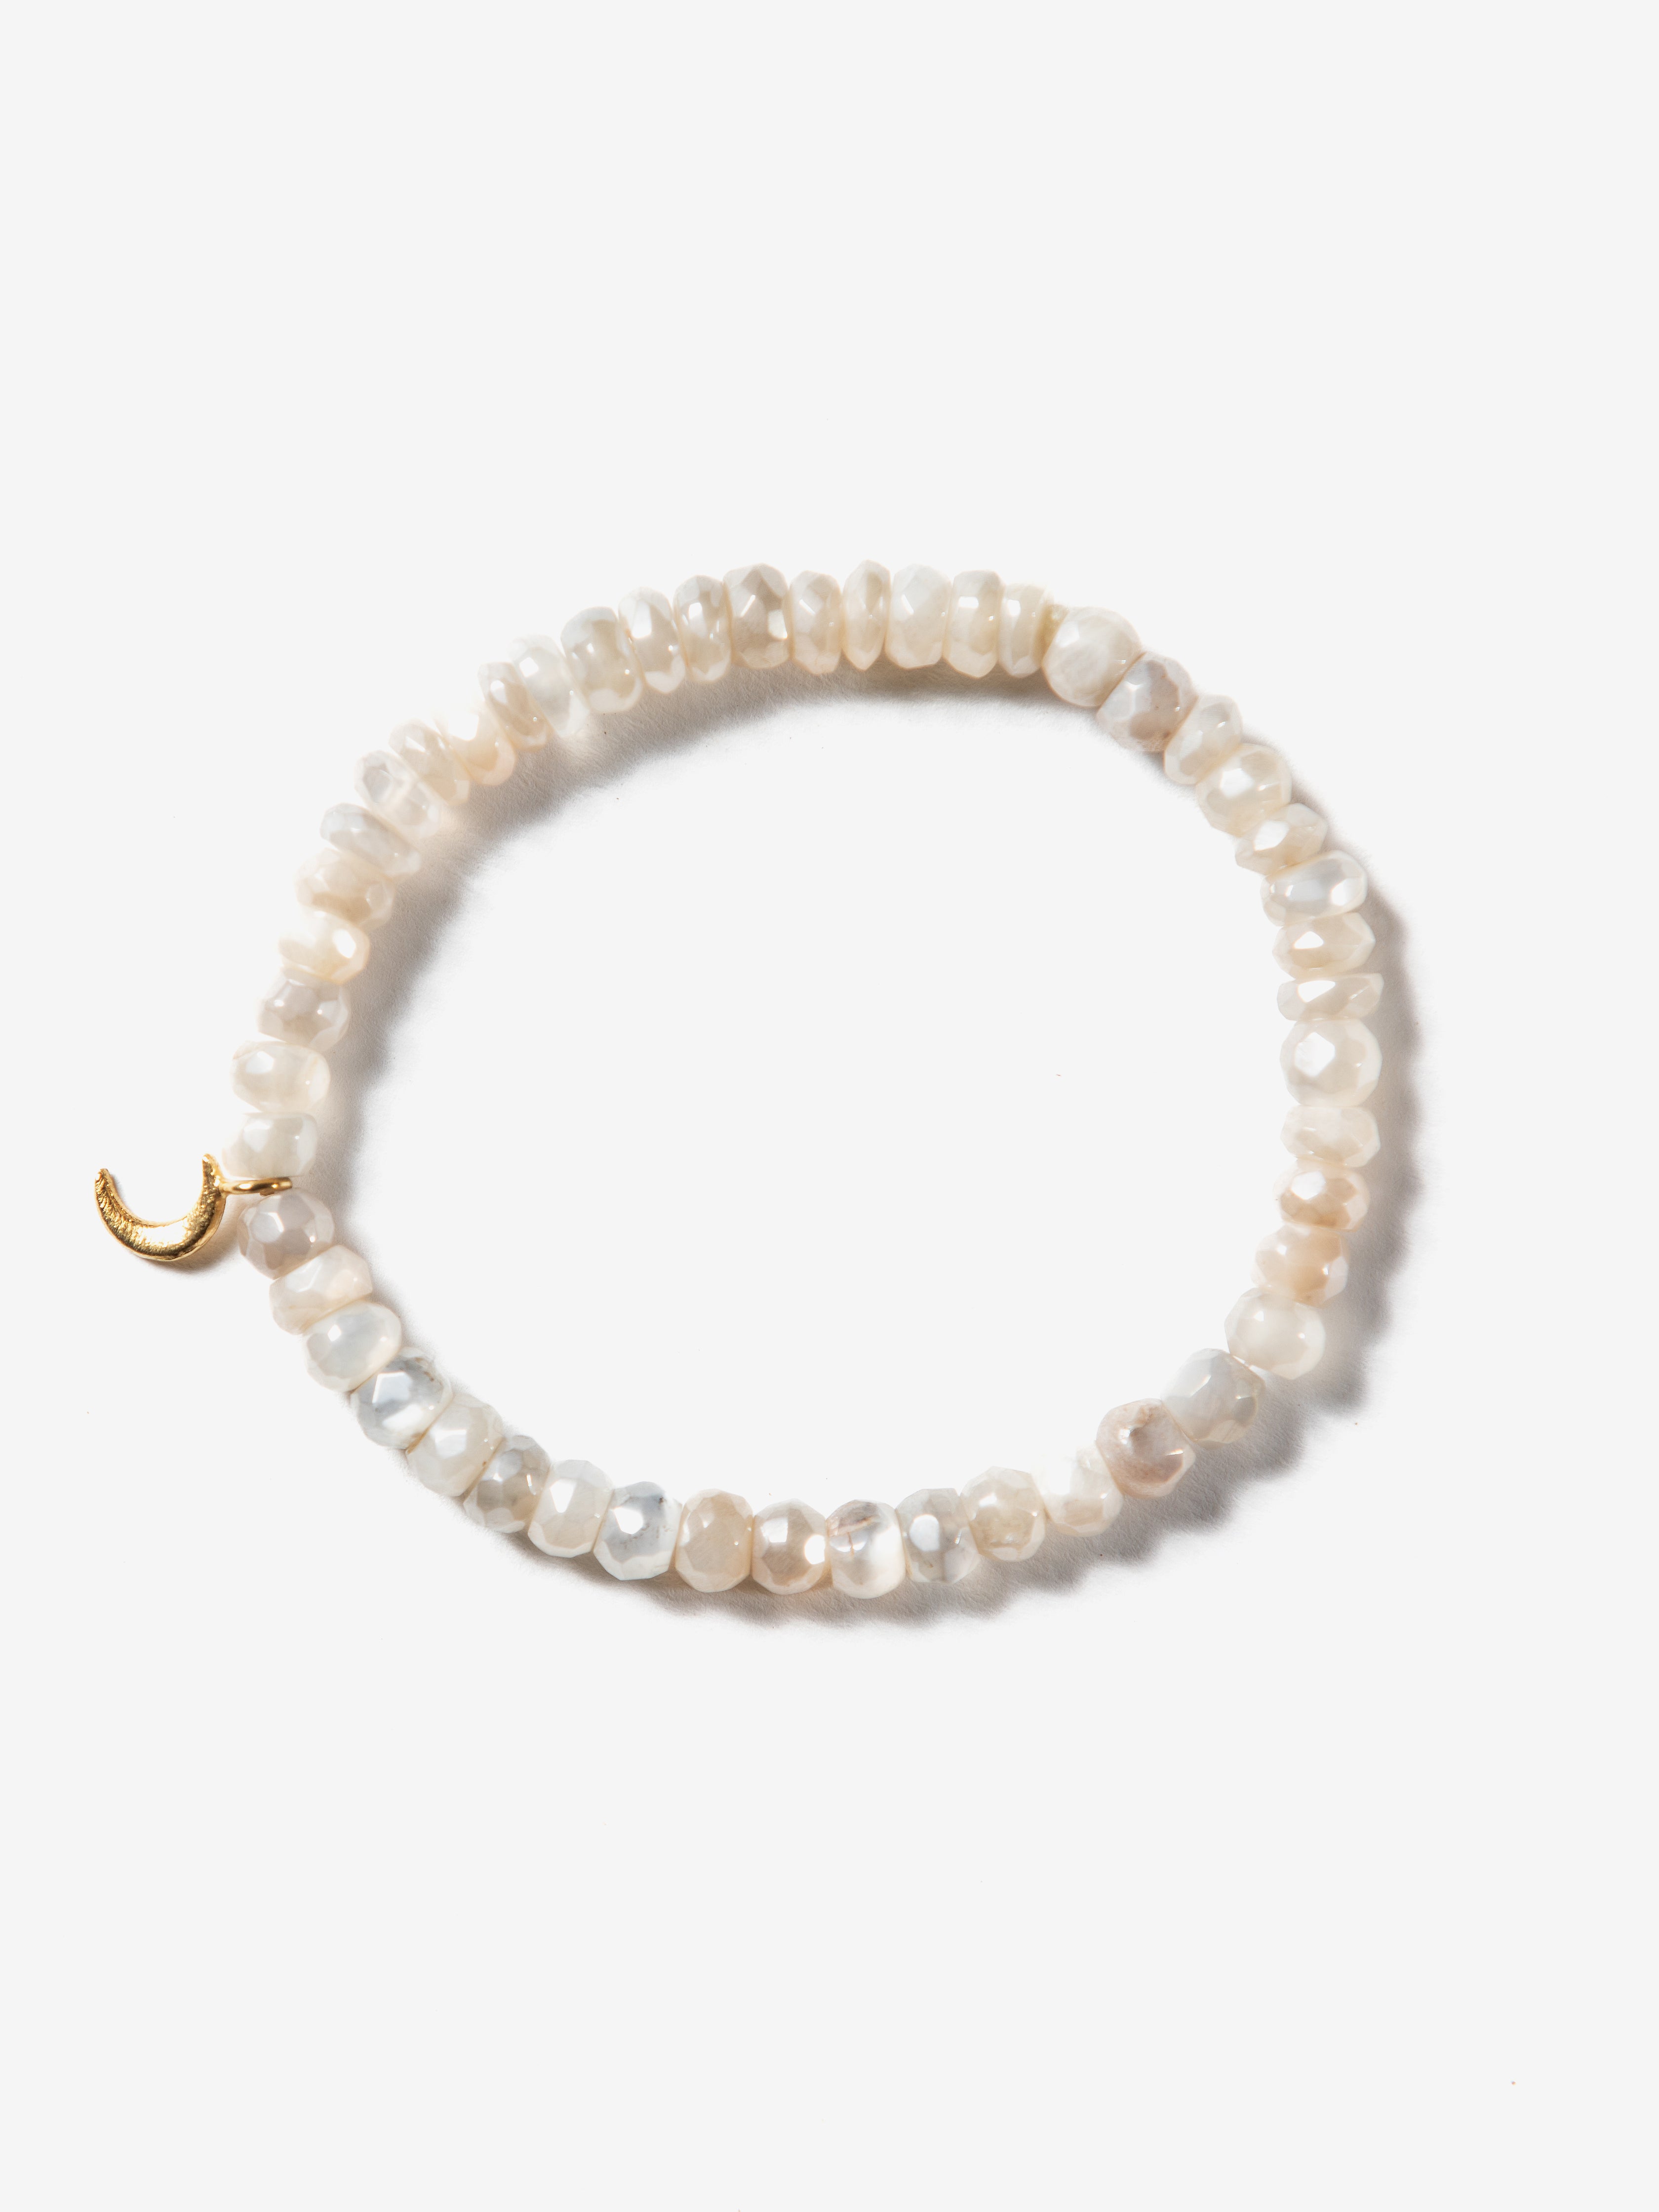 Goddess Charms Moon Stone Bracelet - Pearl